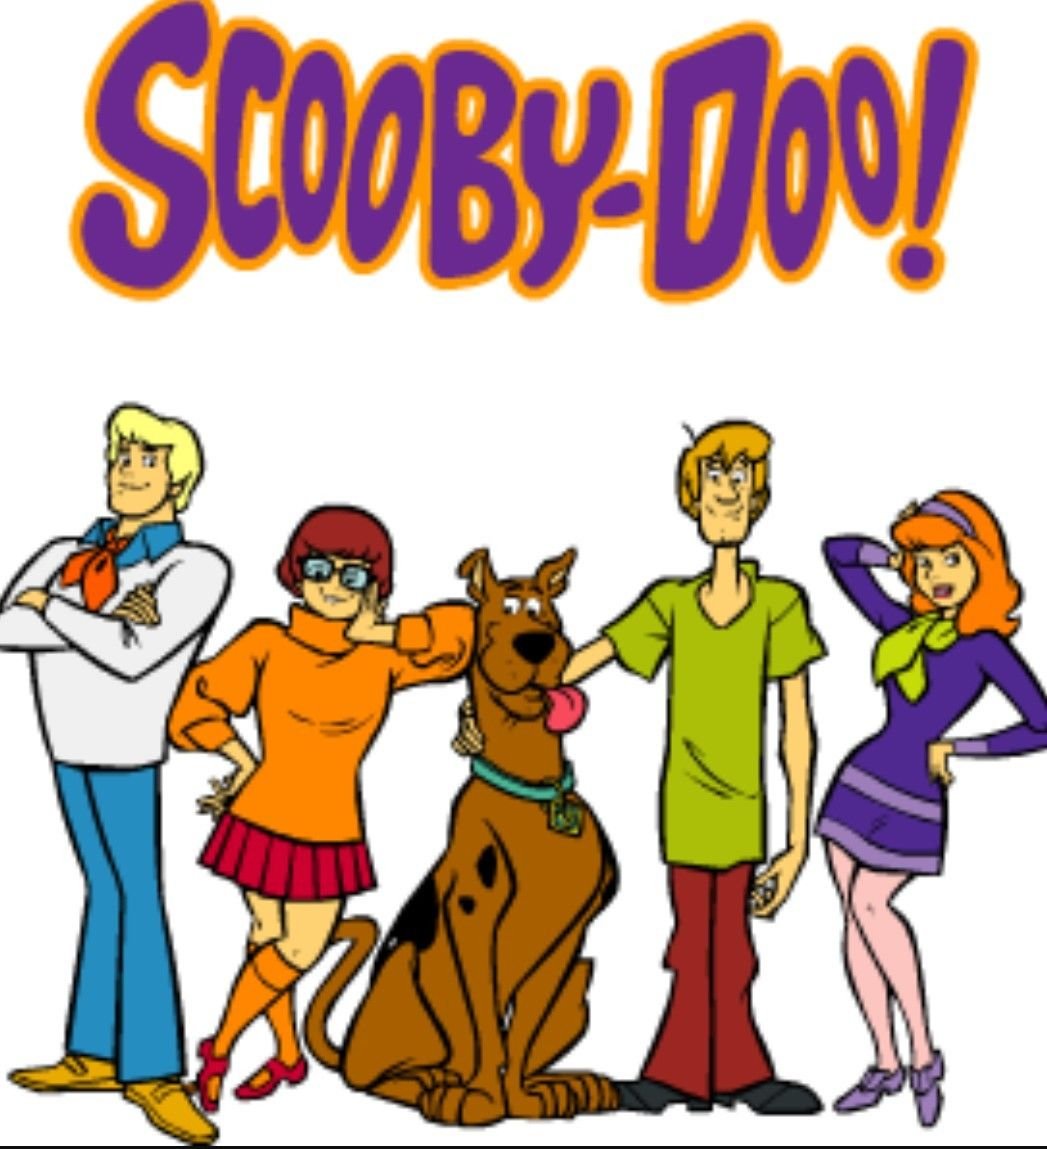 Scooby doo песня. Скуби Ду. Скуби Ду герои. Команда Скуби Ду. Рост героев Скуби-Ду.